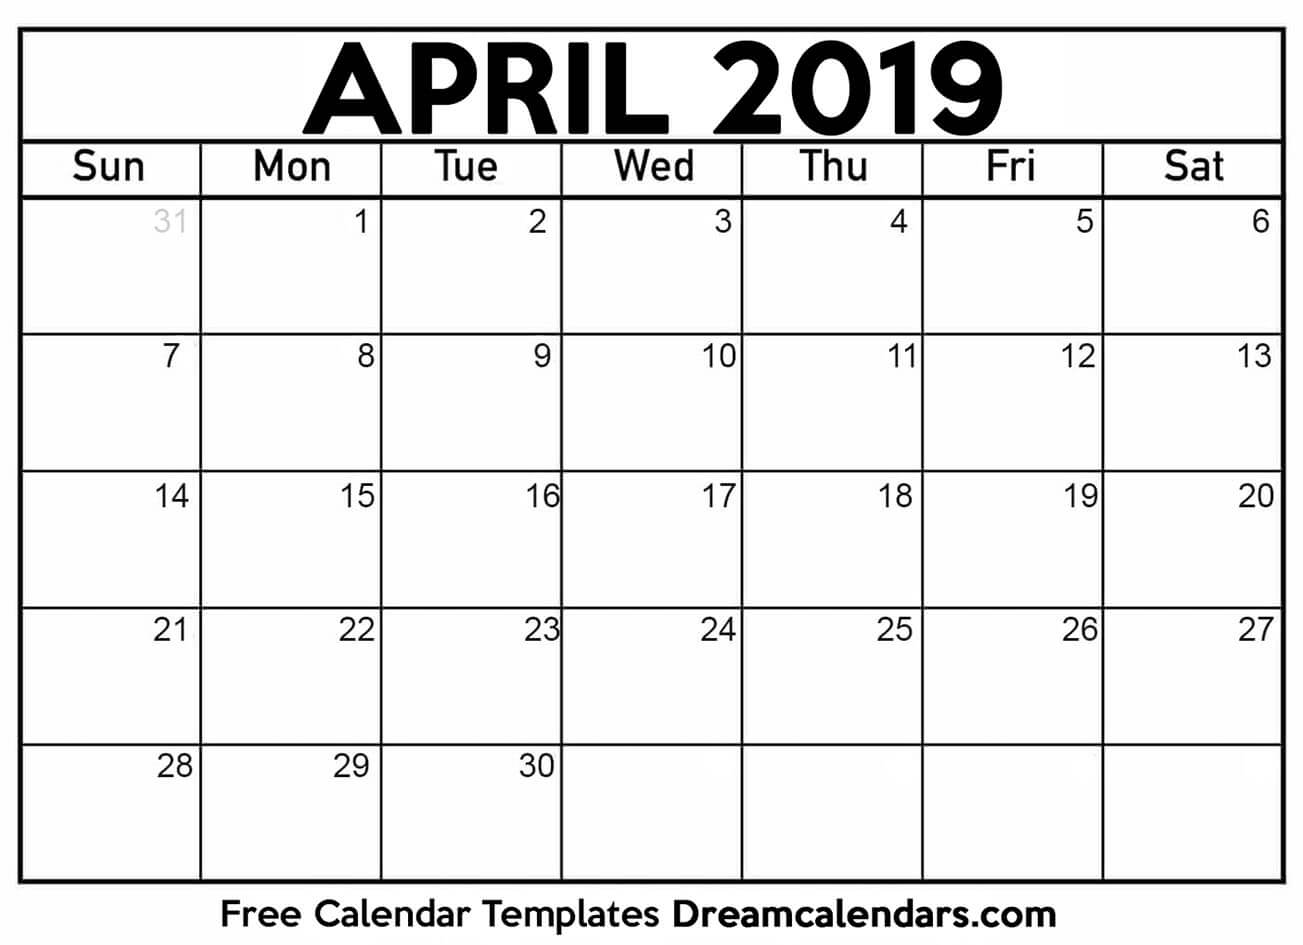 April 2019 calendar free blank printable templates